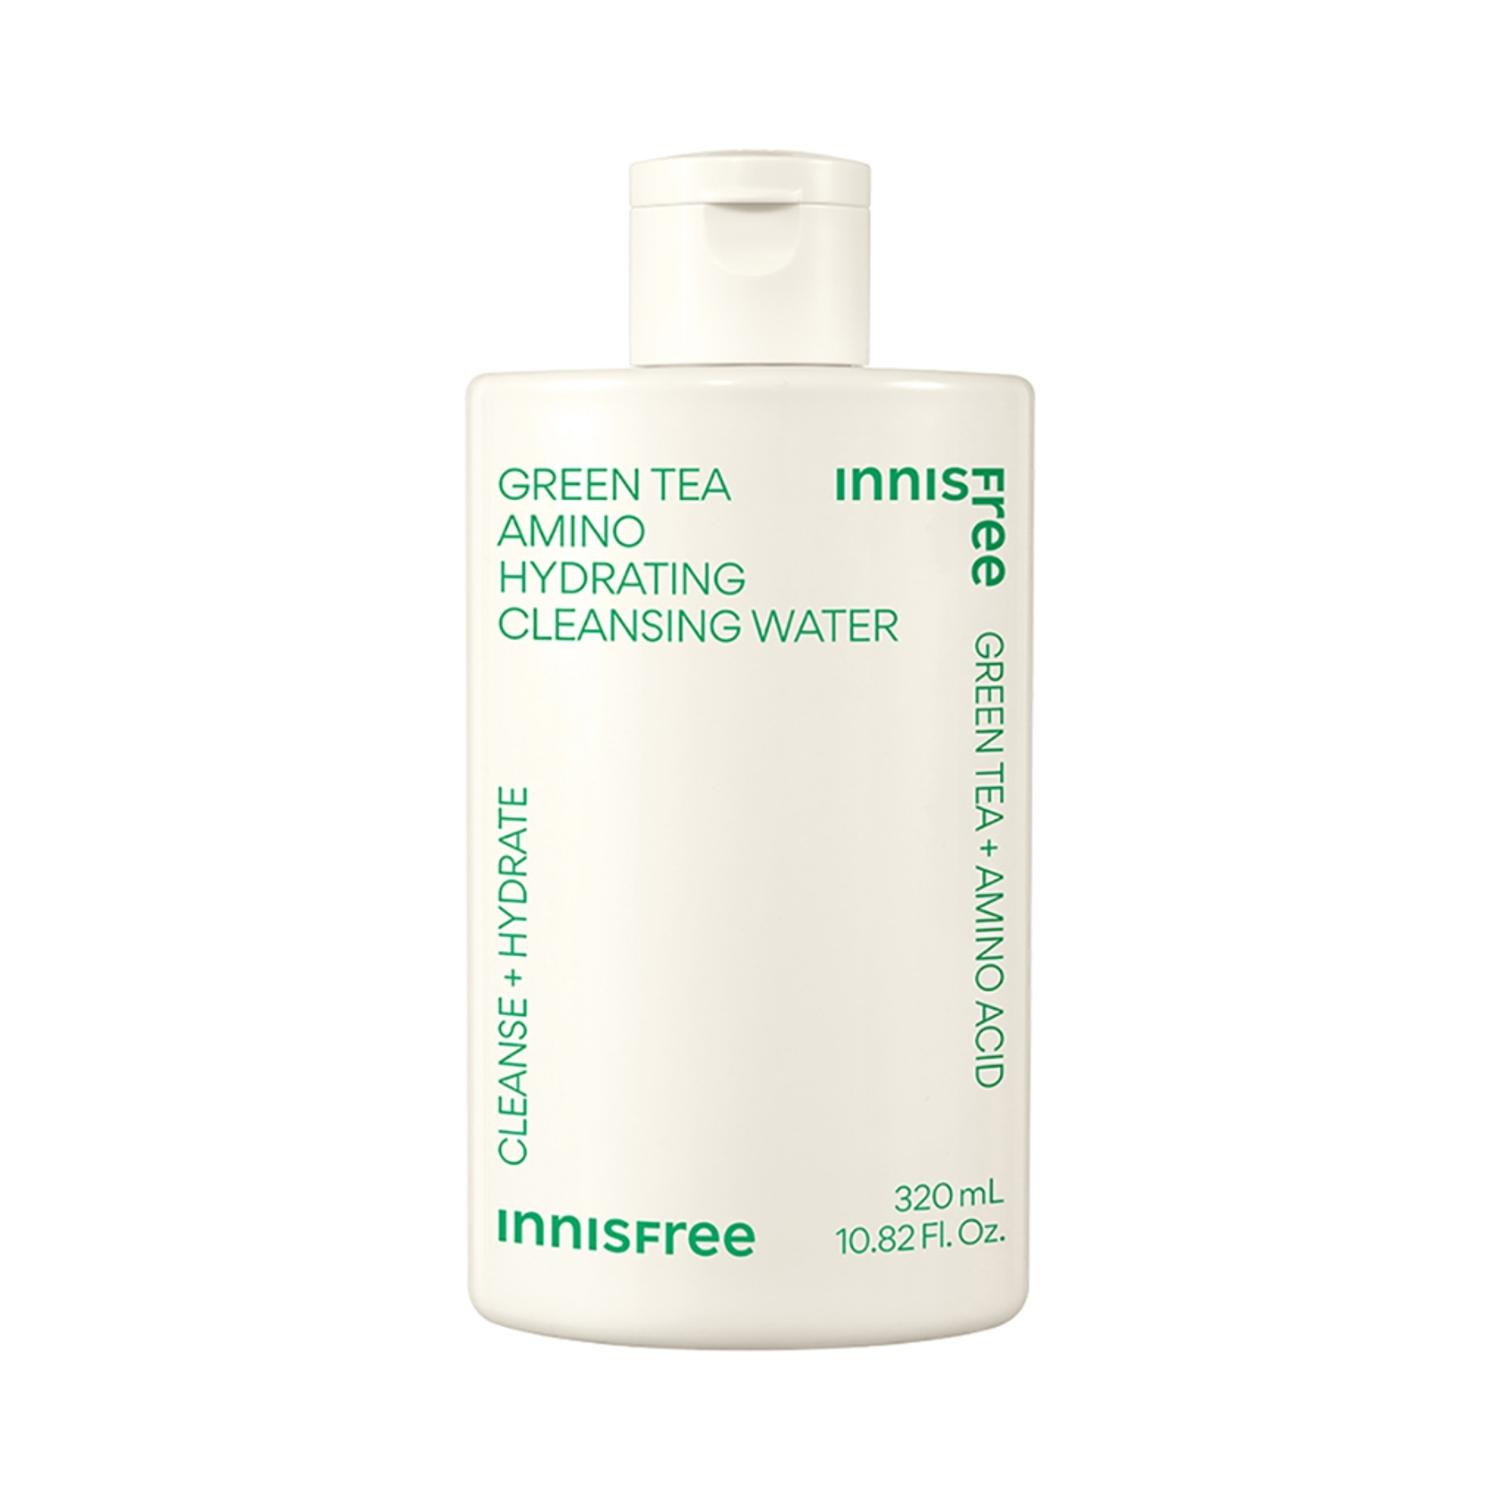 innisfree green tea amino cleansing water (320ml)